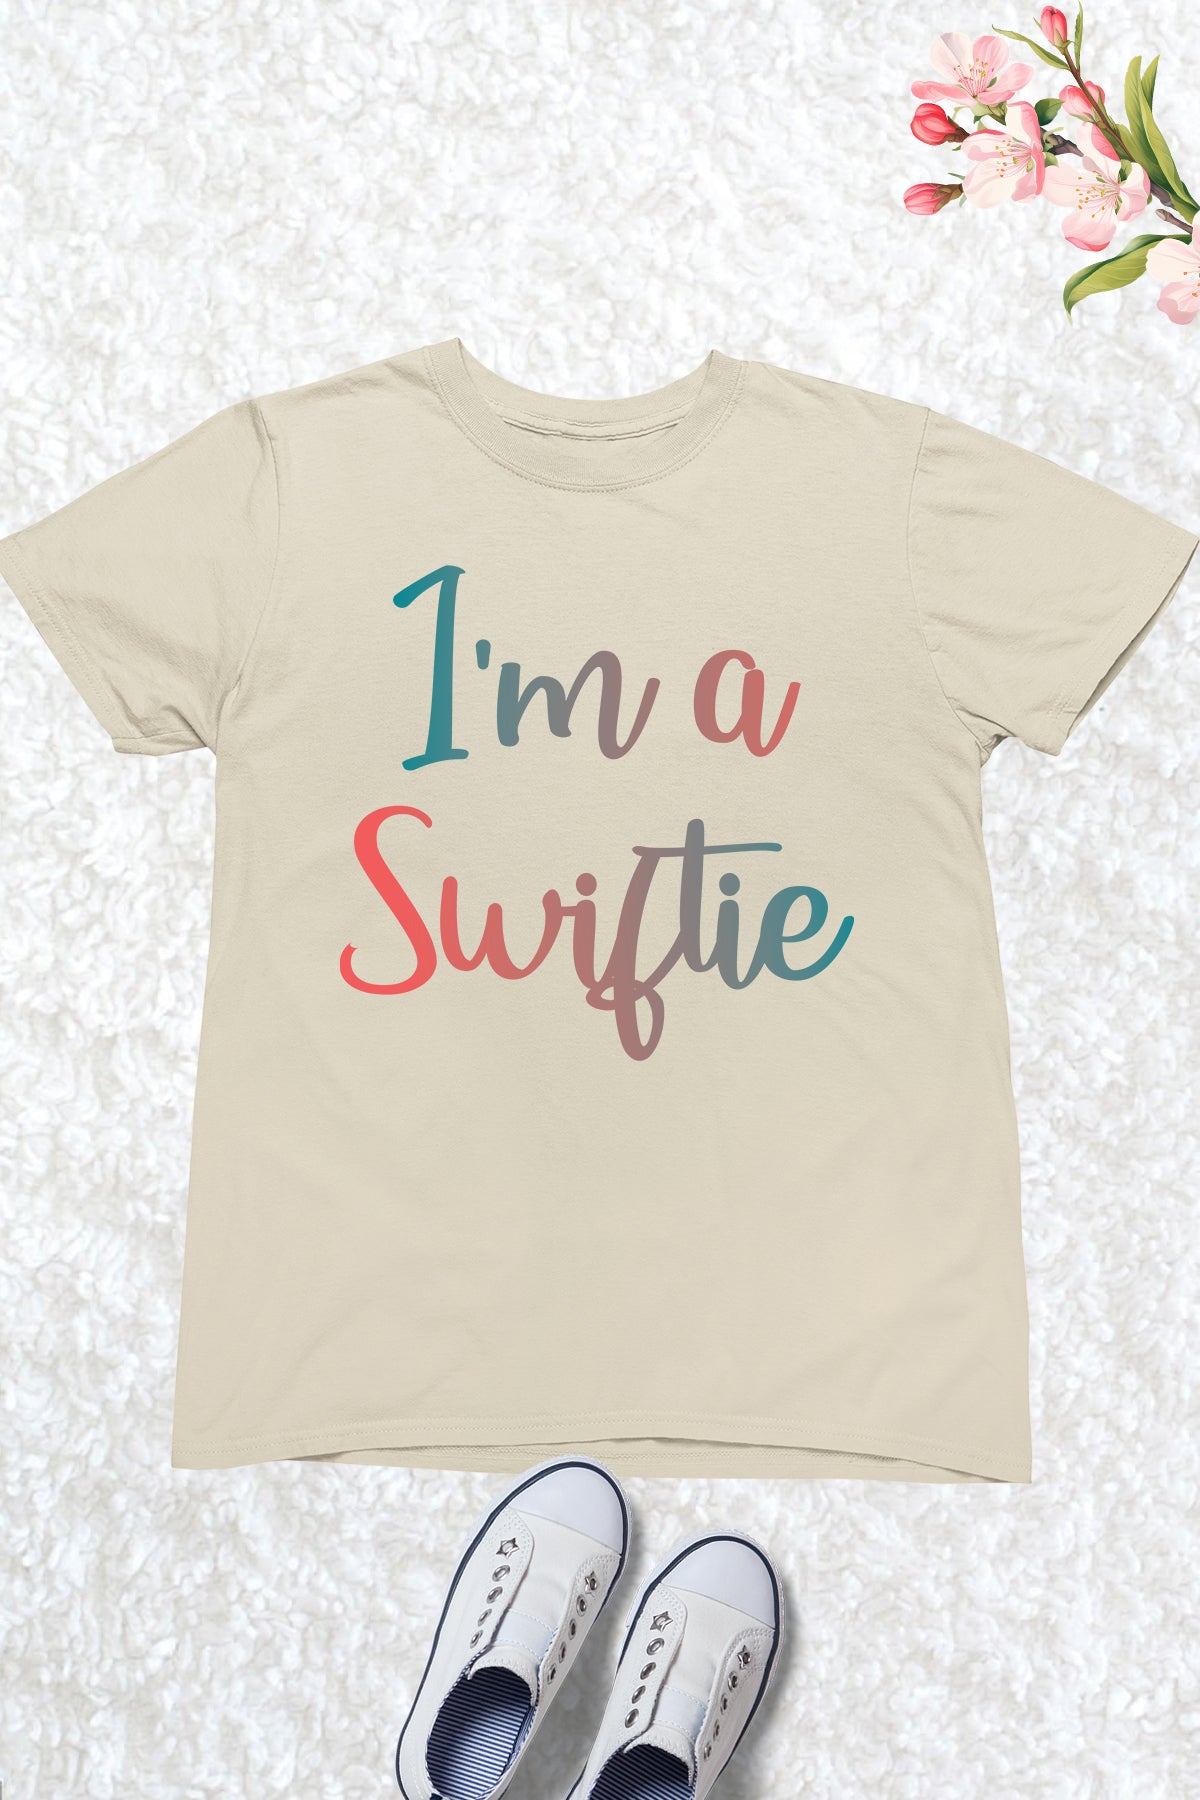 I am a Swiftie Childrens Shirt